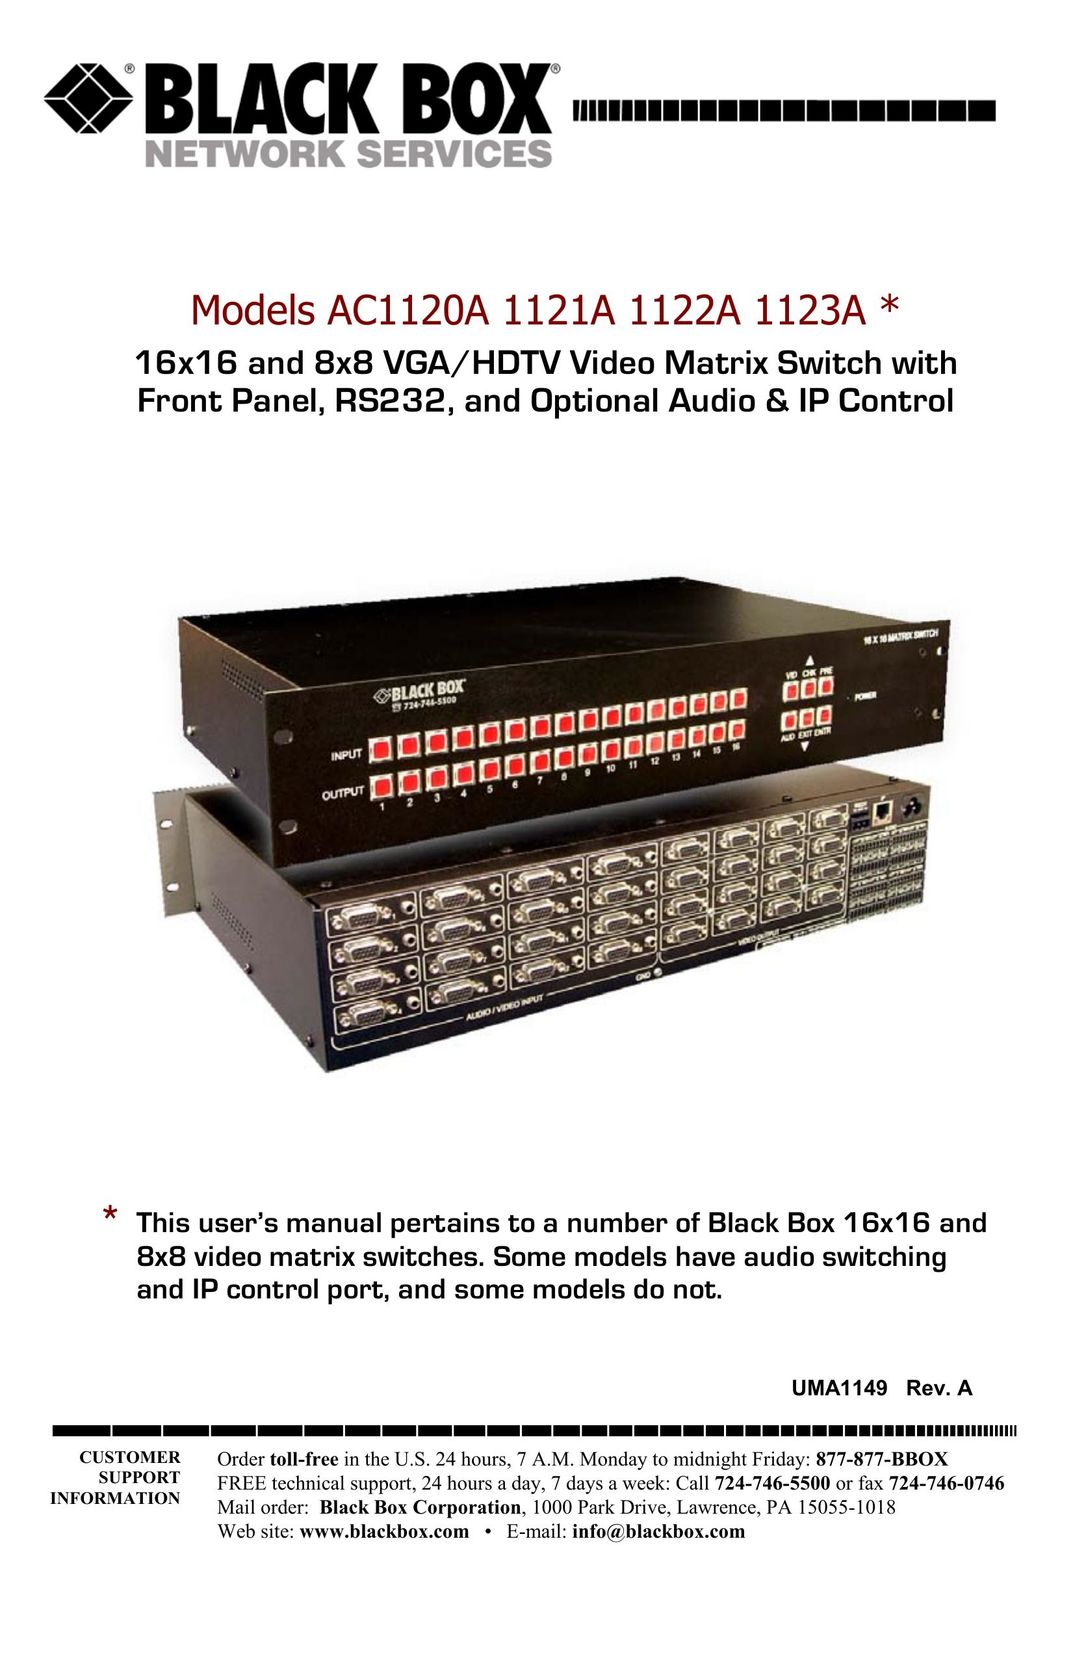 Black Box 1122A TV Video Accessories User Manual